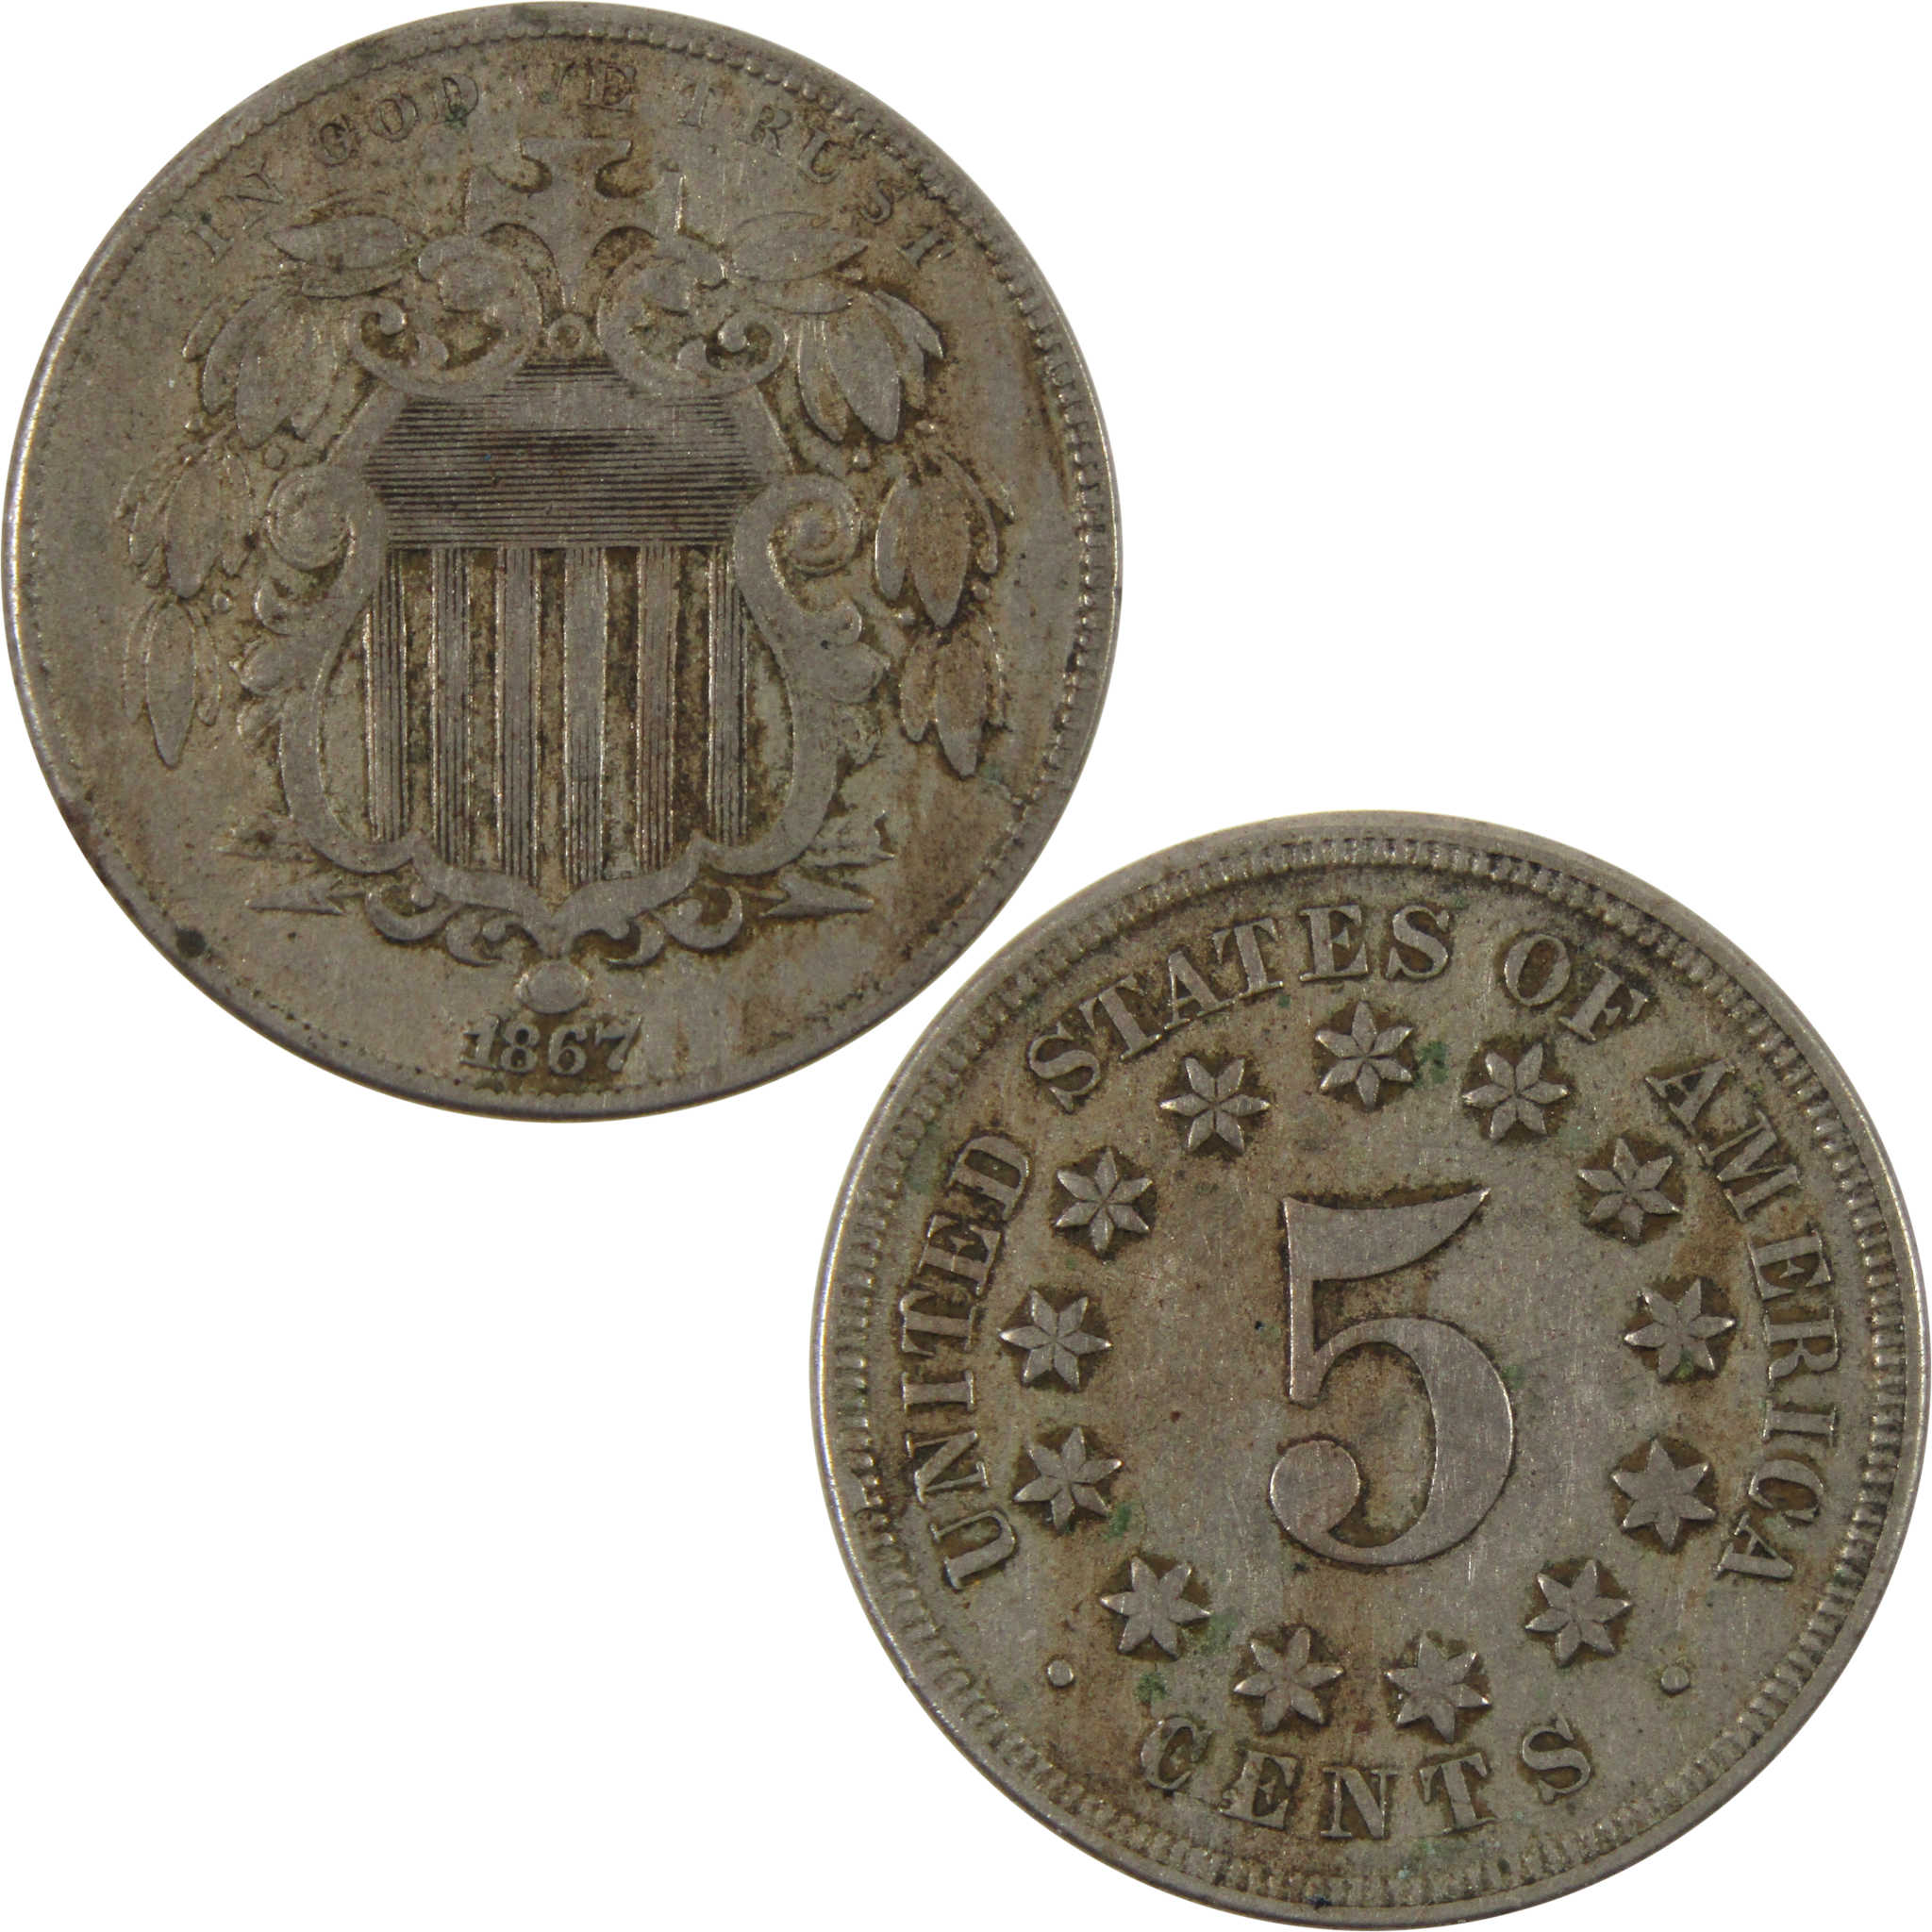 1867 No Rays Shield Nickel VF Very Fine 5c Coin SKU:CPC3705